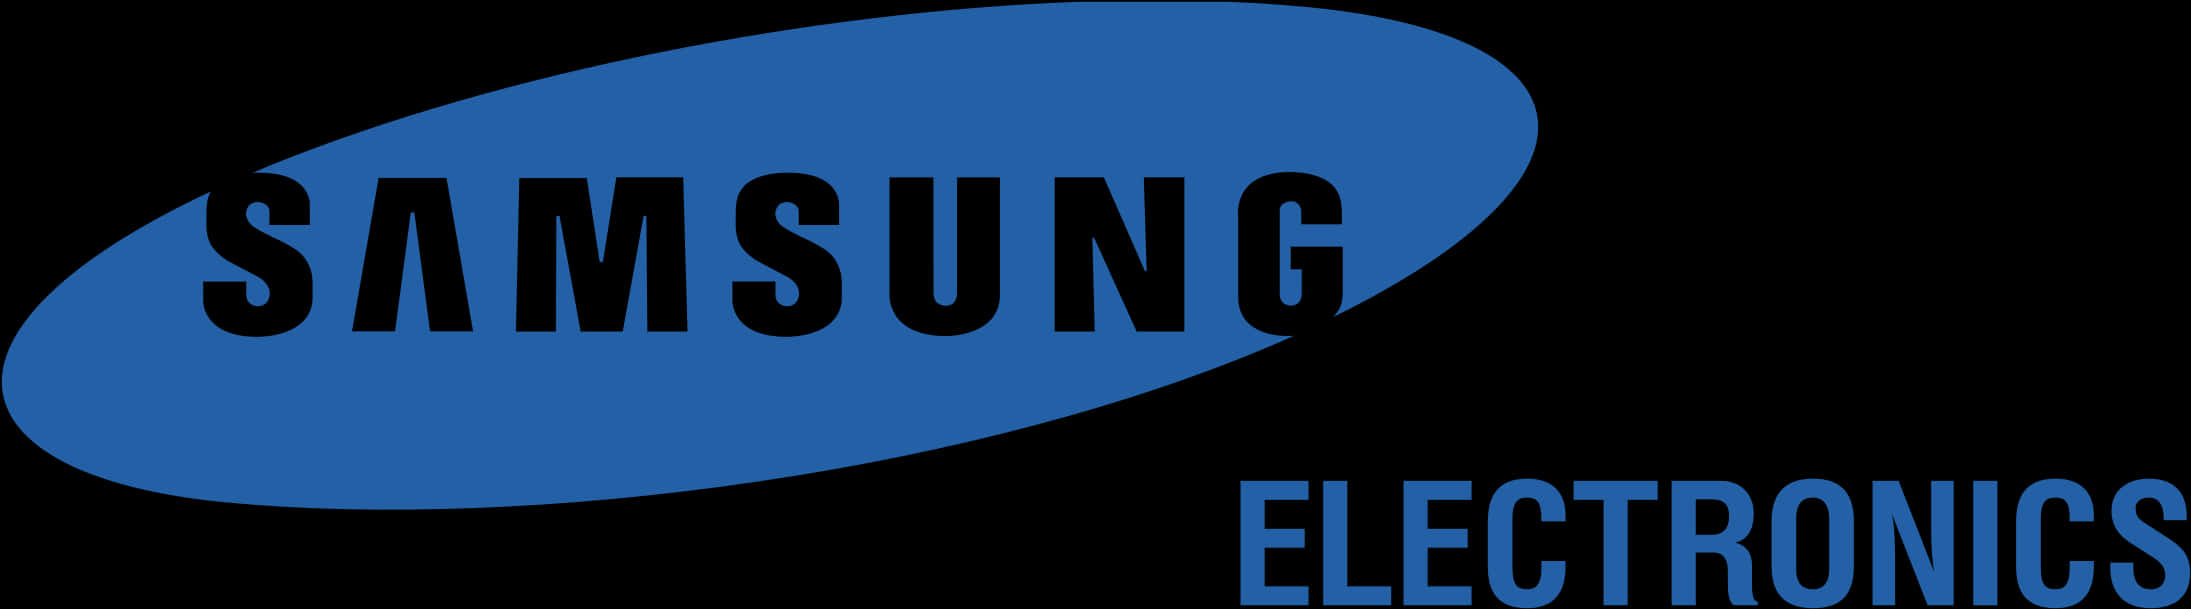 Samsung Electronics Logo PNG